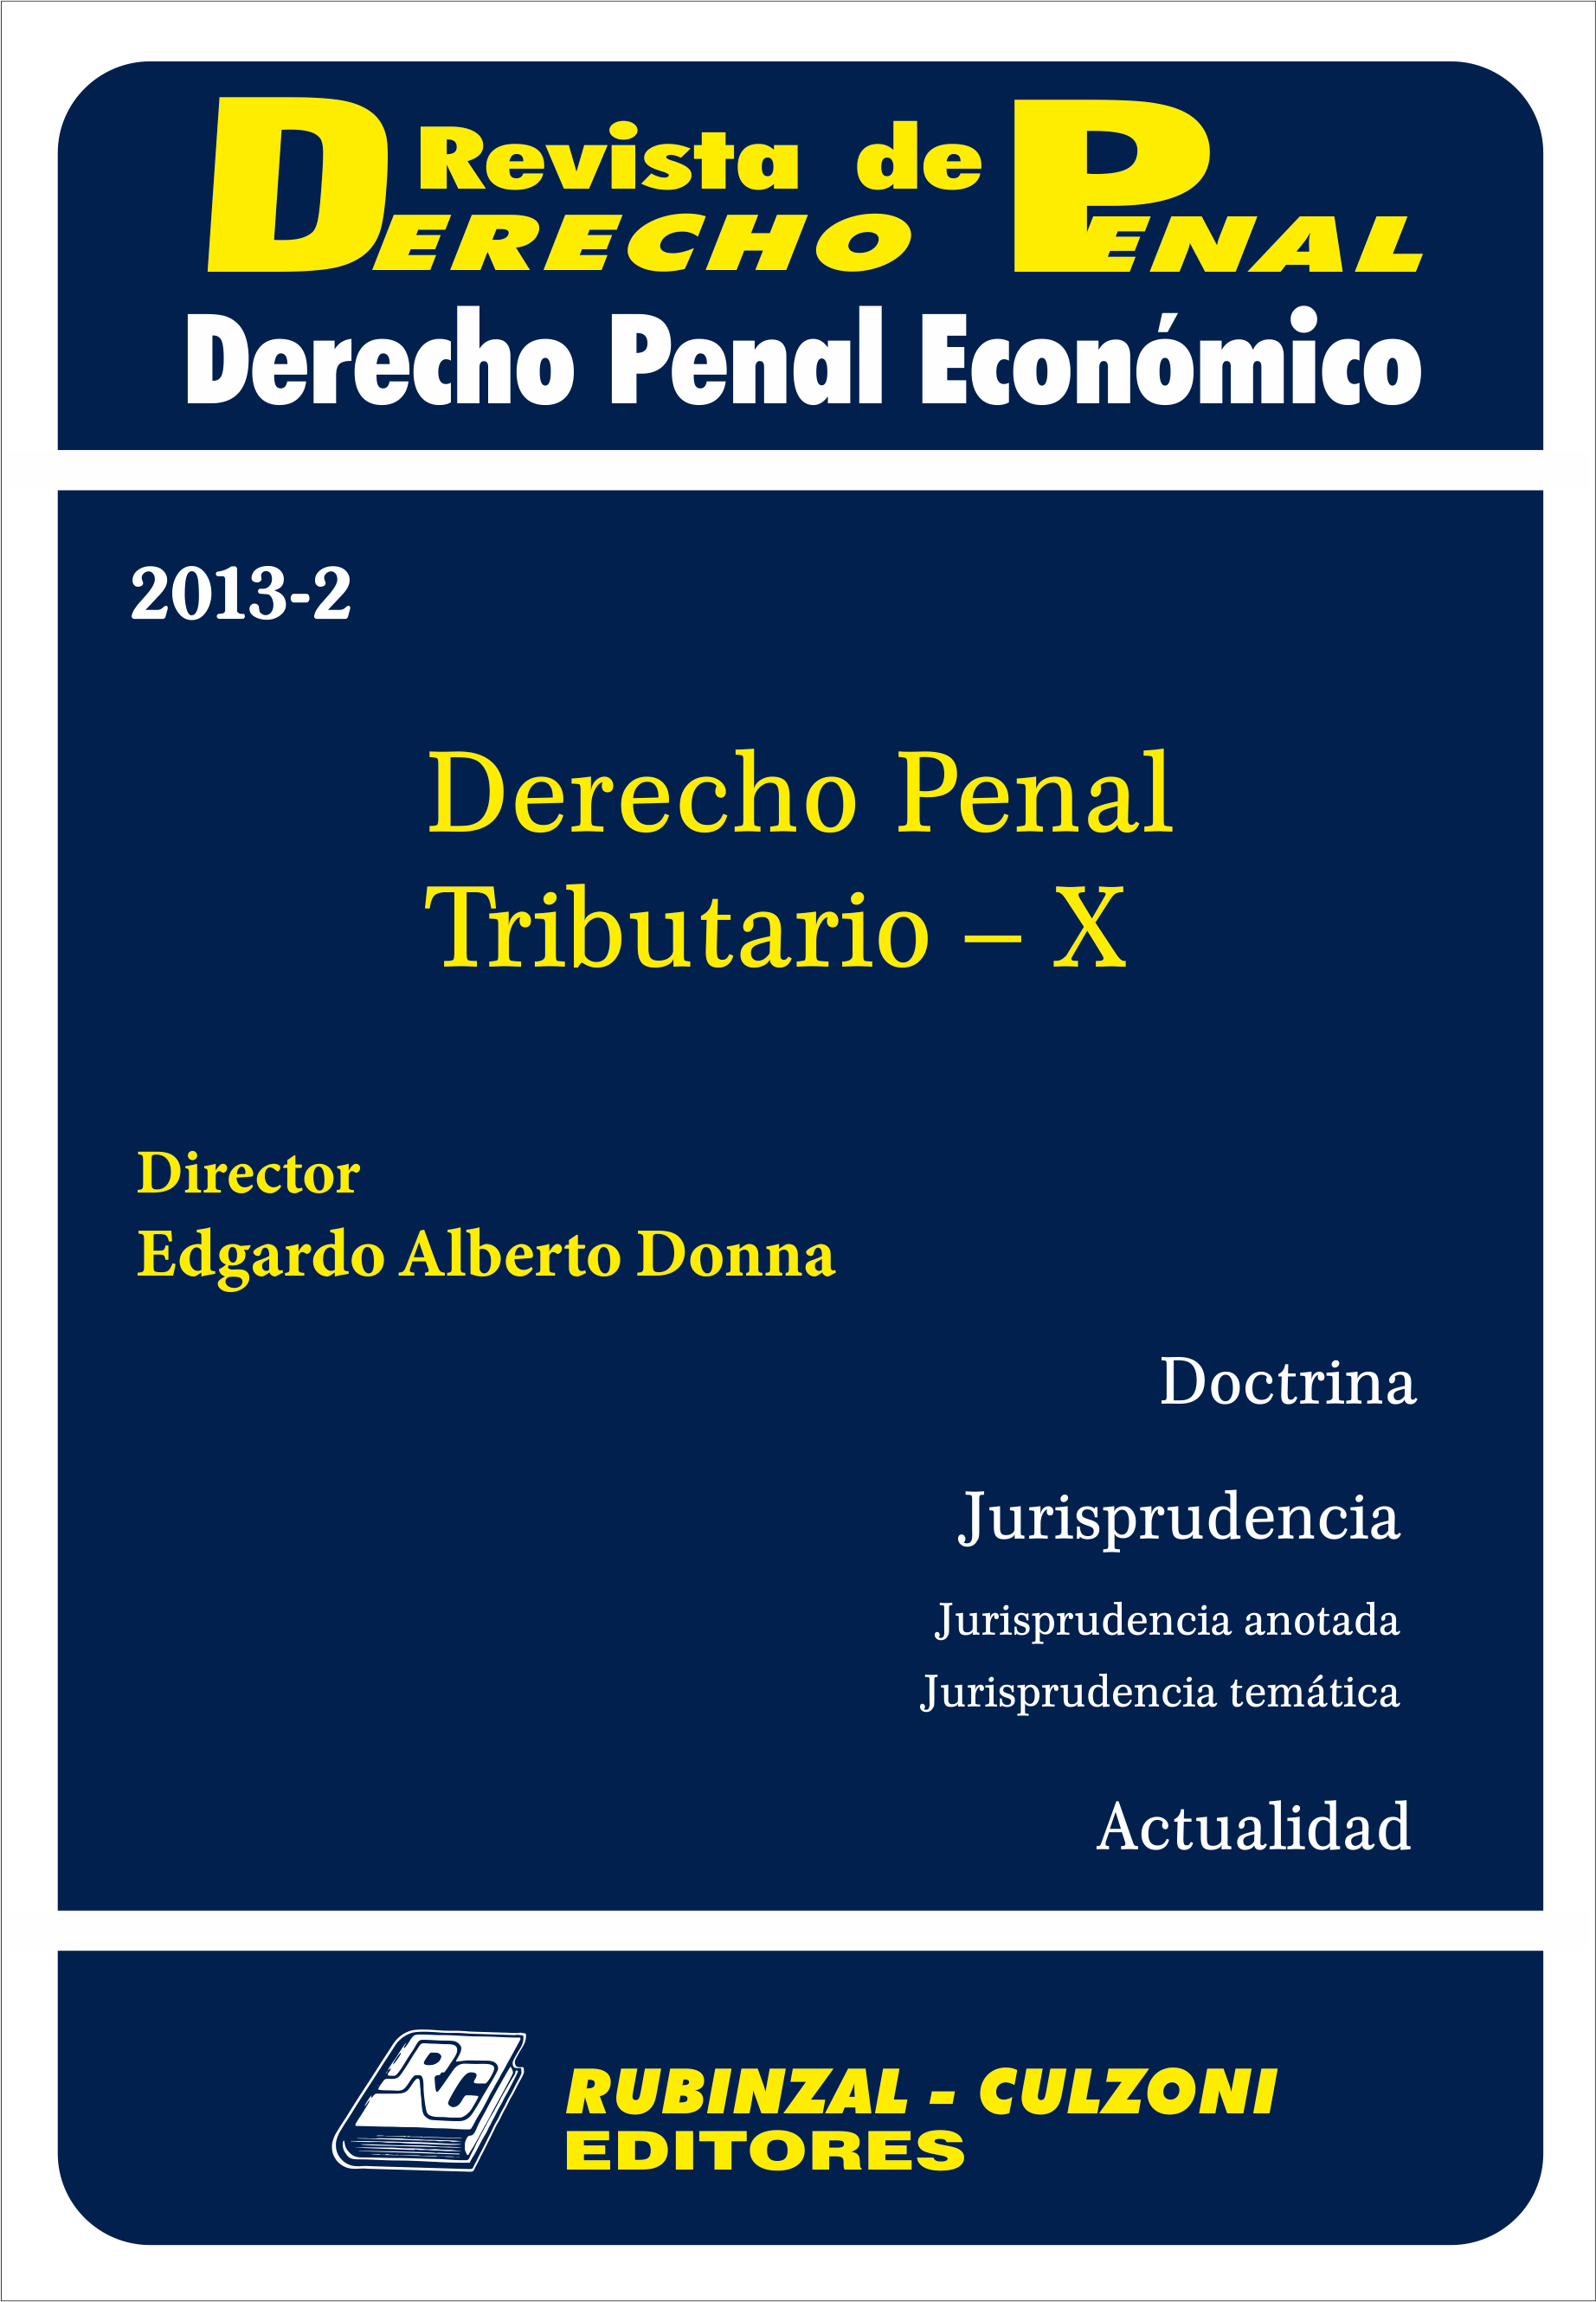 Derecho Penal Tributario - X. [2013-2]